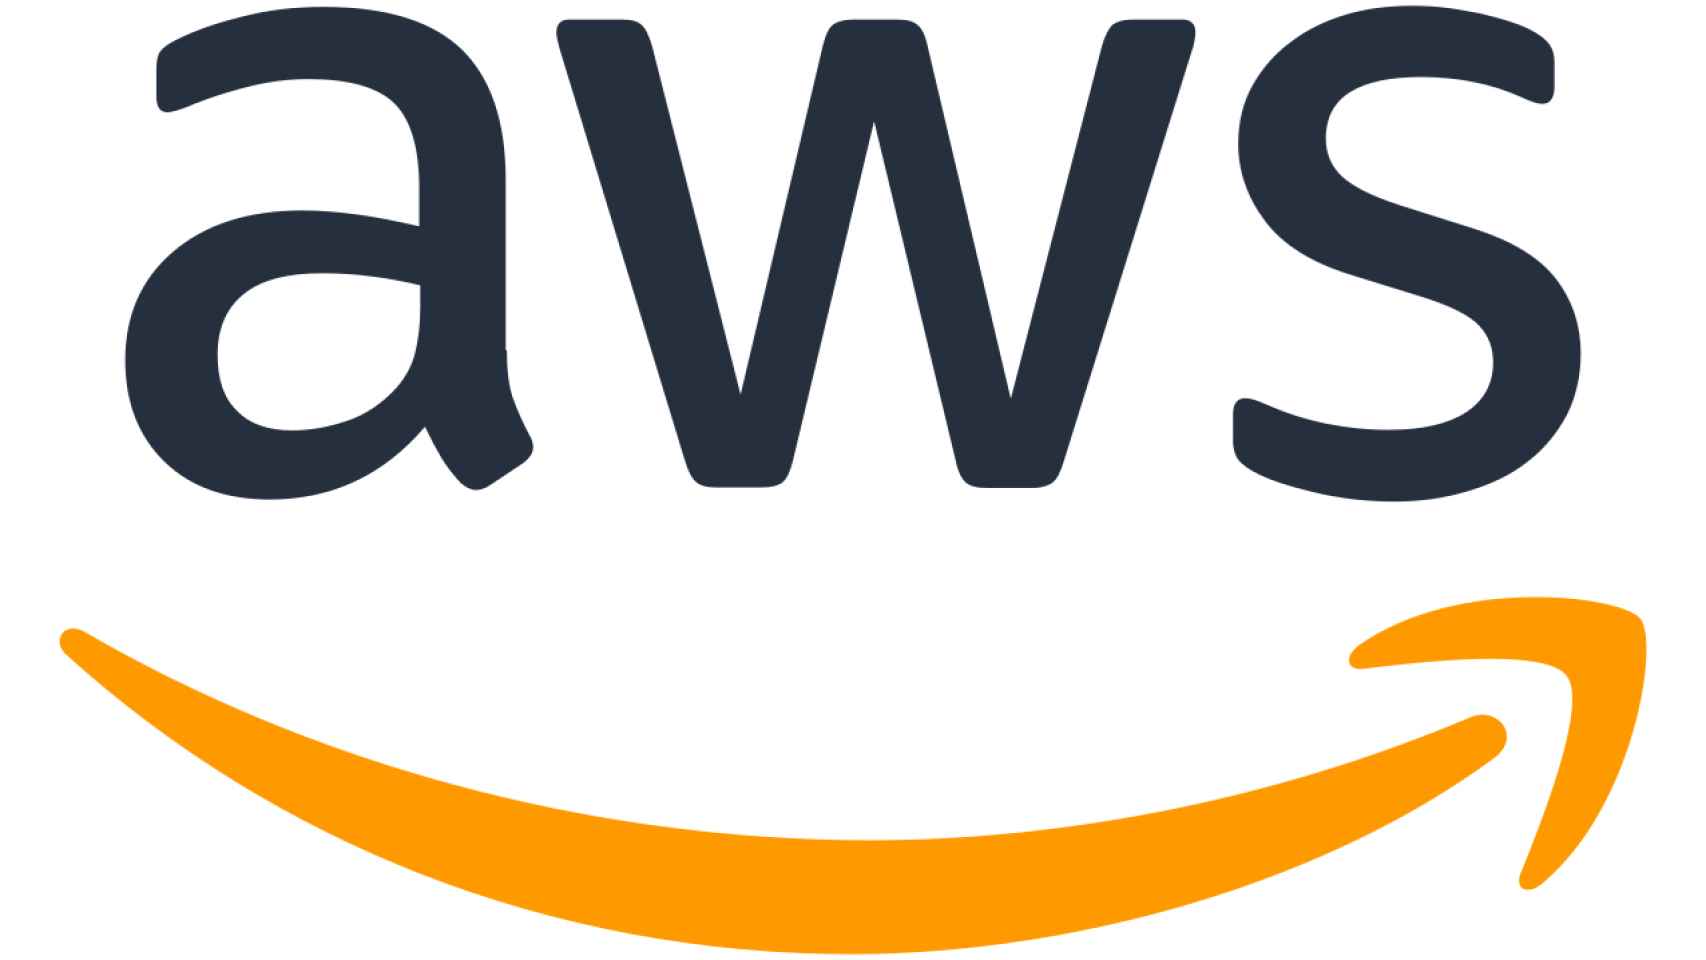 Amazon Web Services.